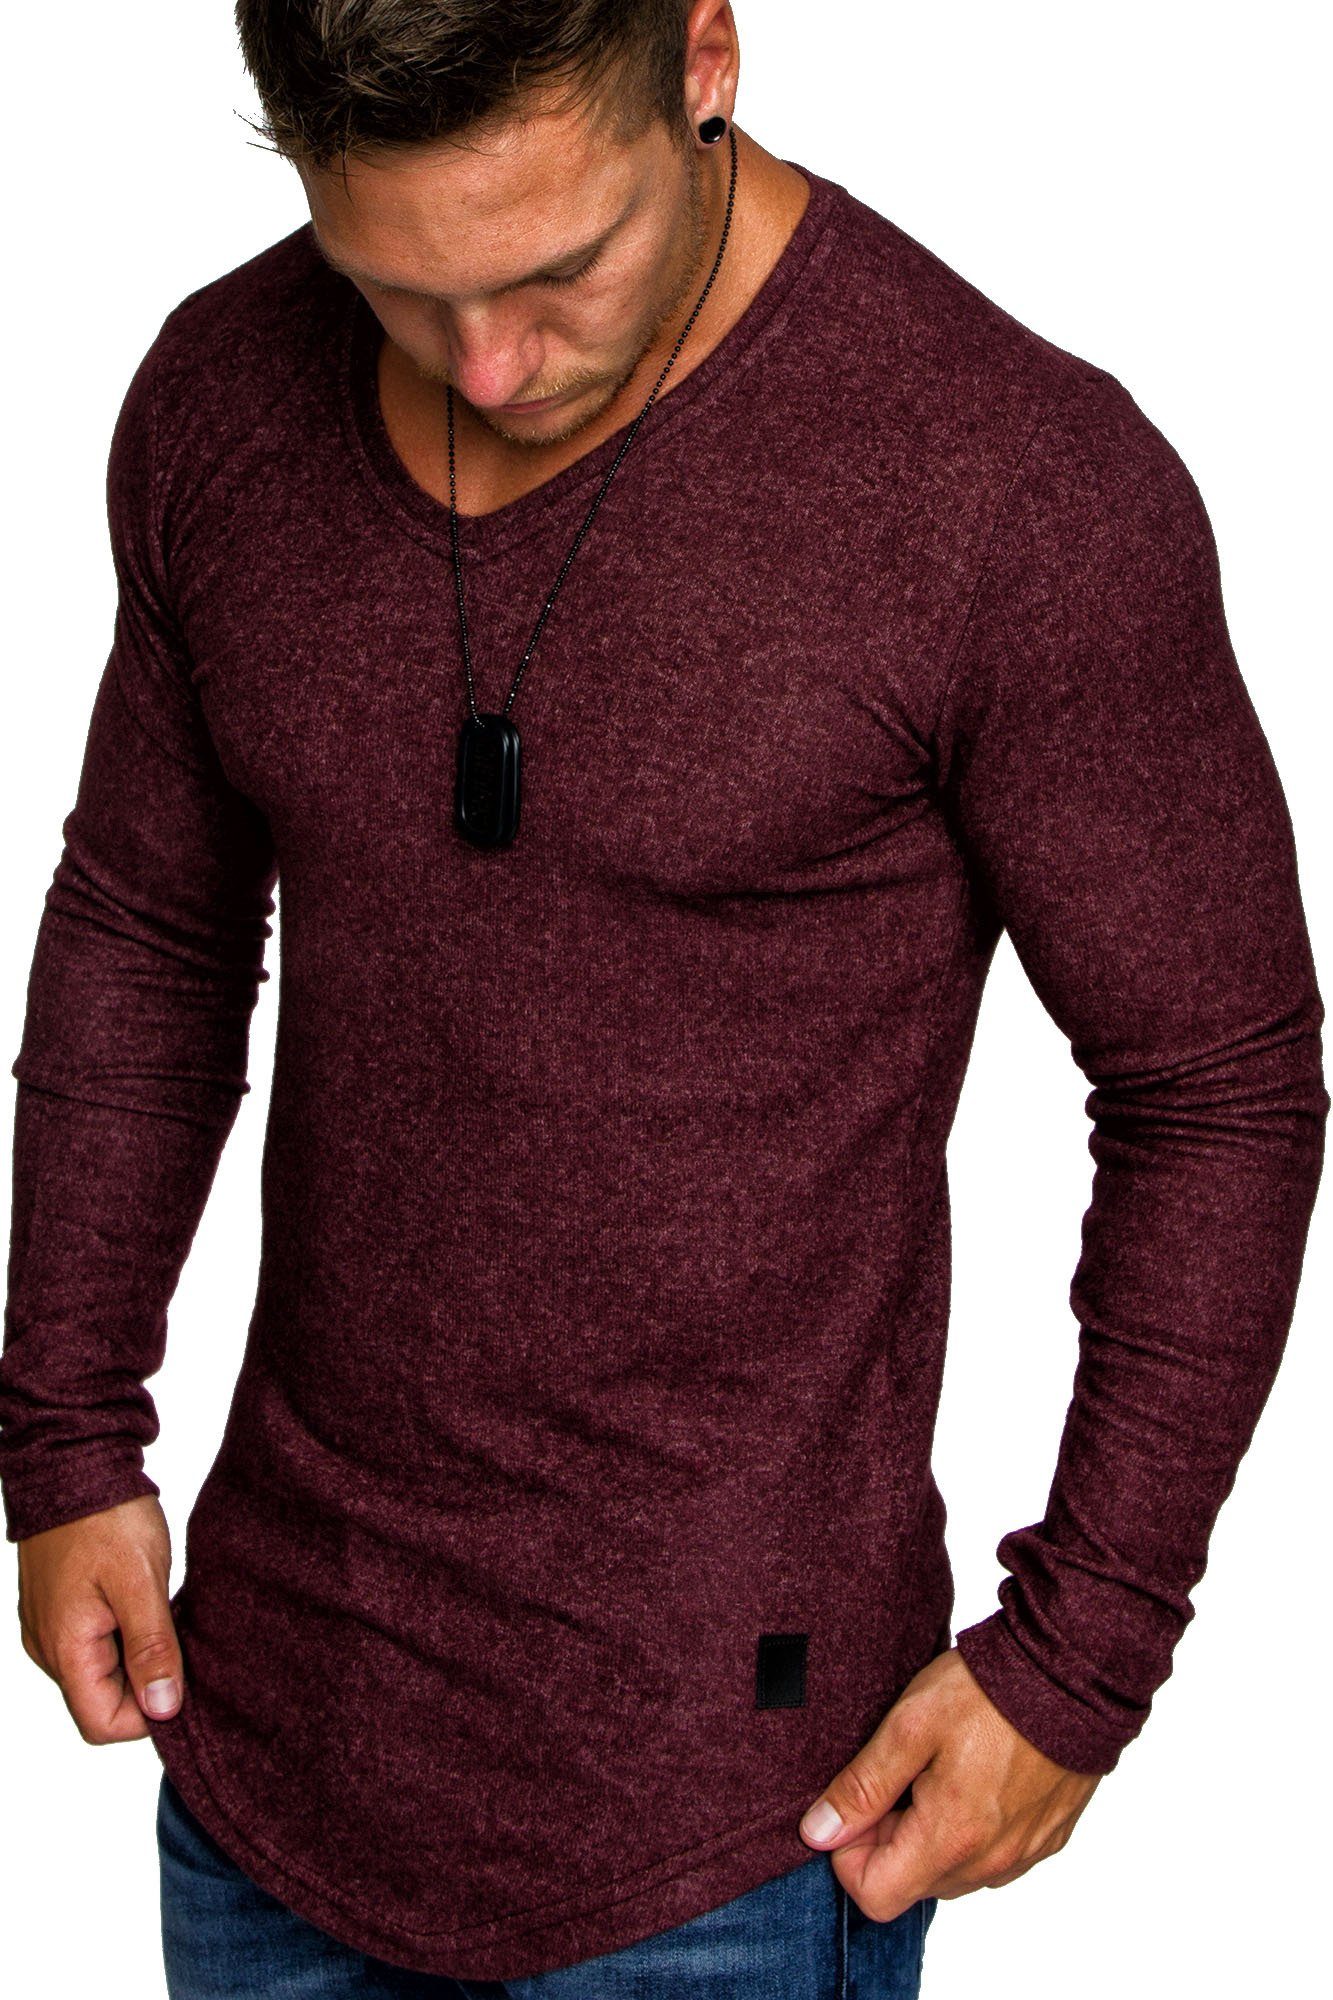 DAVIE Herren V-Ausschnitt Oversize Amaci&Sons Hoodie Pullover Pullover Bordeaux Melange Basic Feinstrick Sweatshirt mit